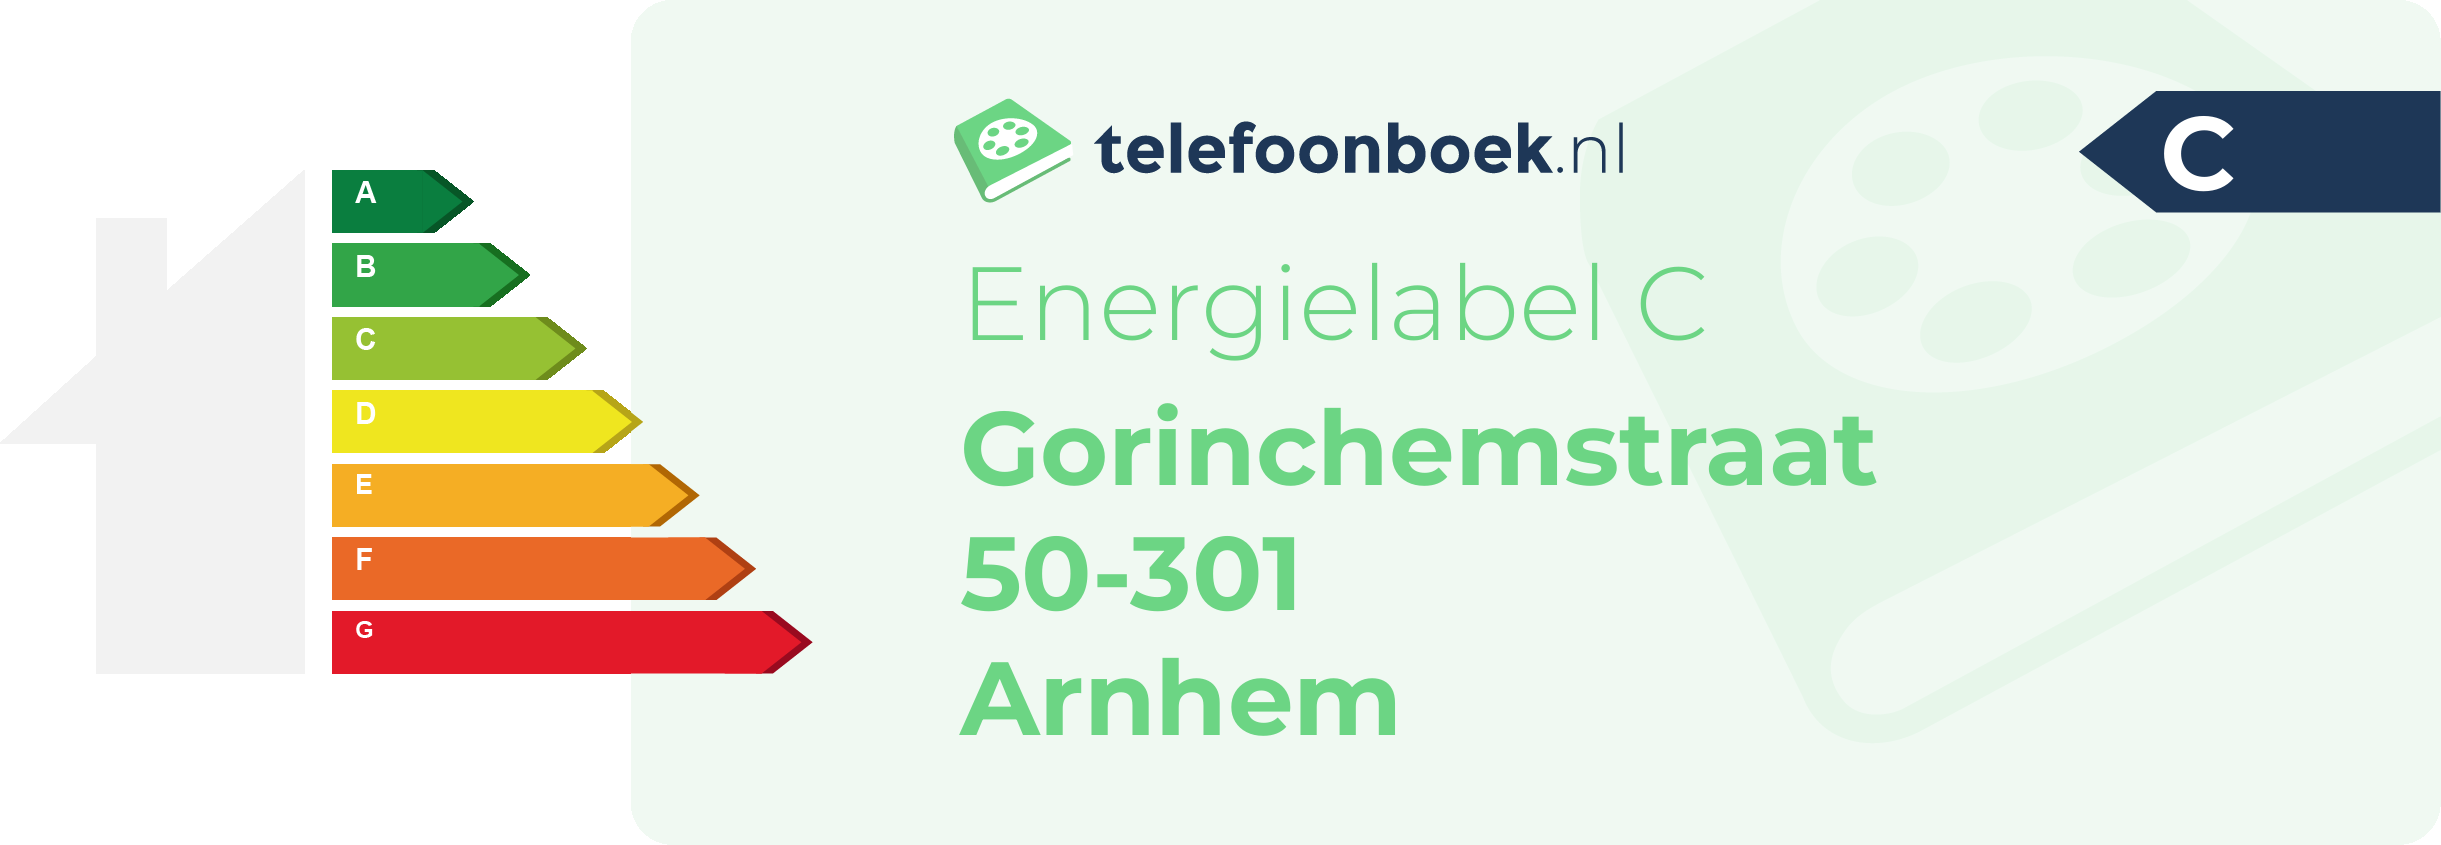 Energielabel Gorinchemstraat 50-301 Arnhem